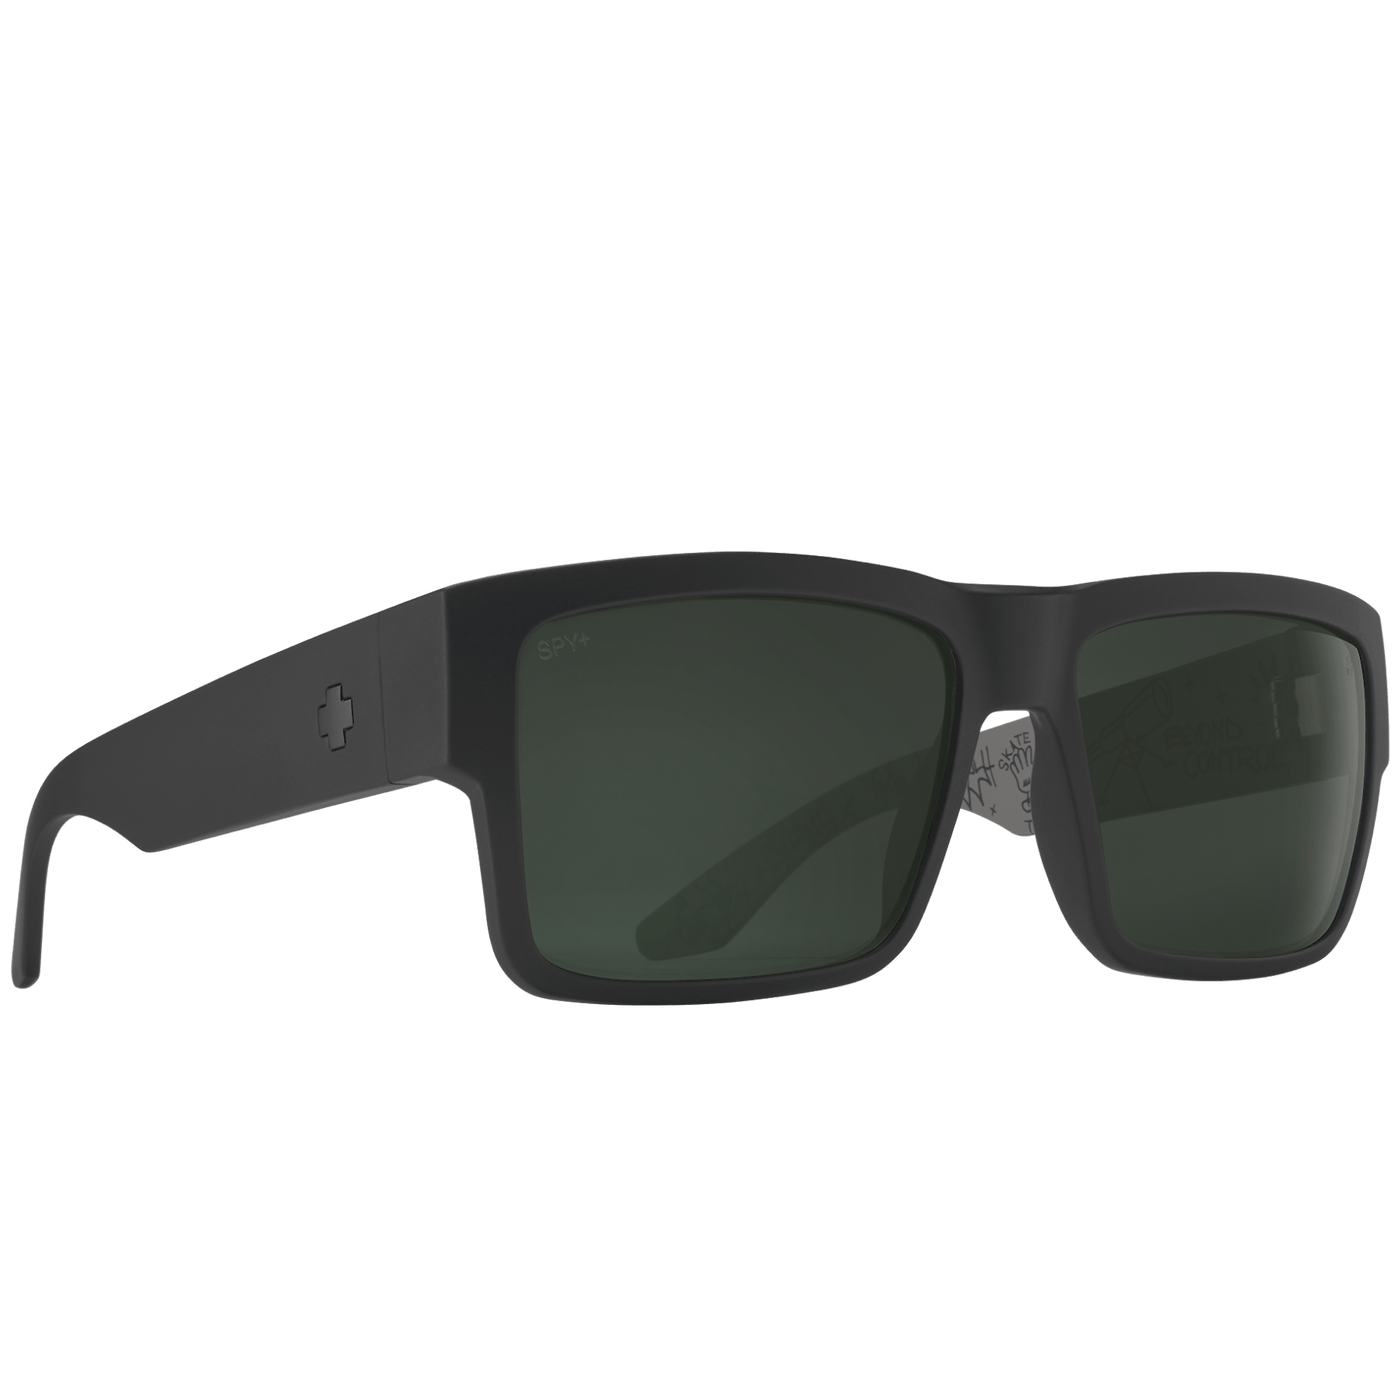 SPY CYRUS Sunglasses, Happy Lens - Gray Crypto 8Lines Shop - Fast Shipping